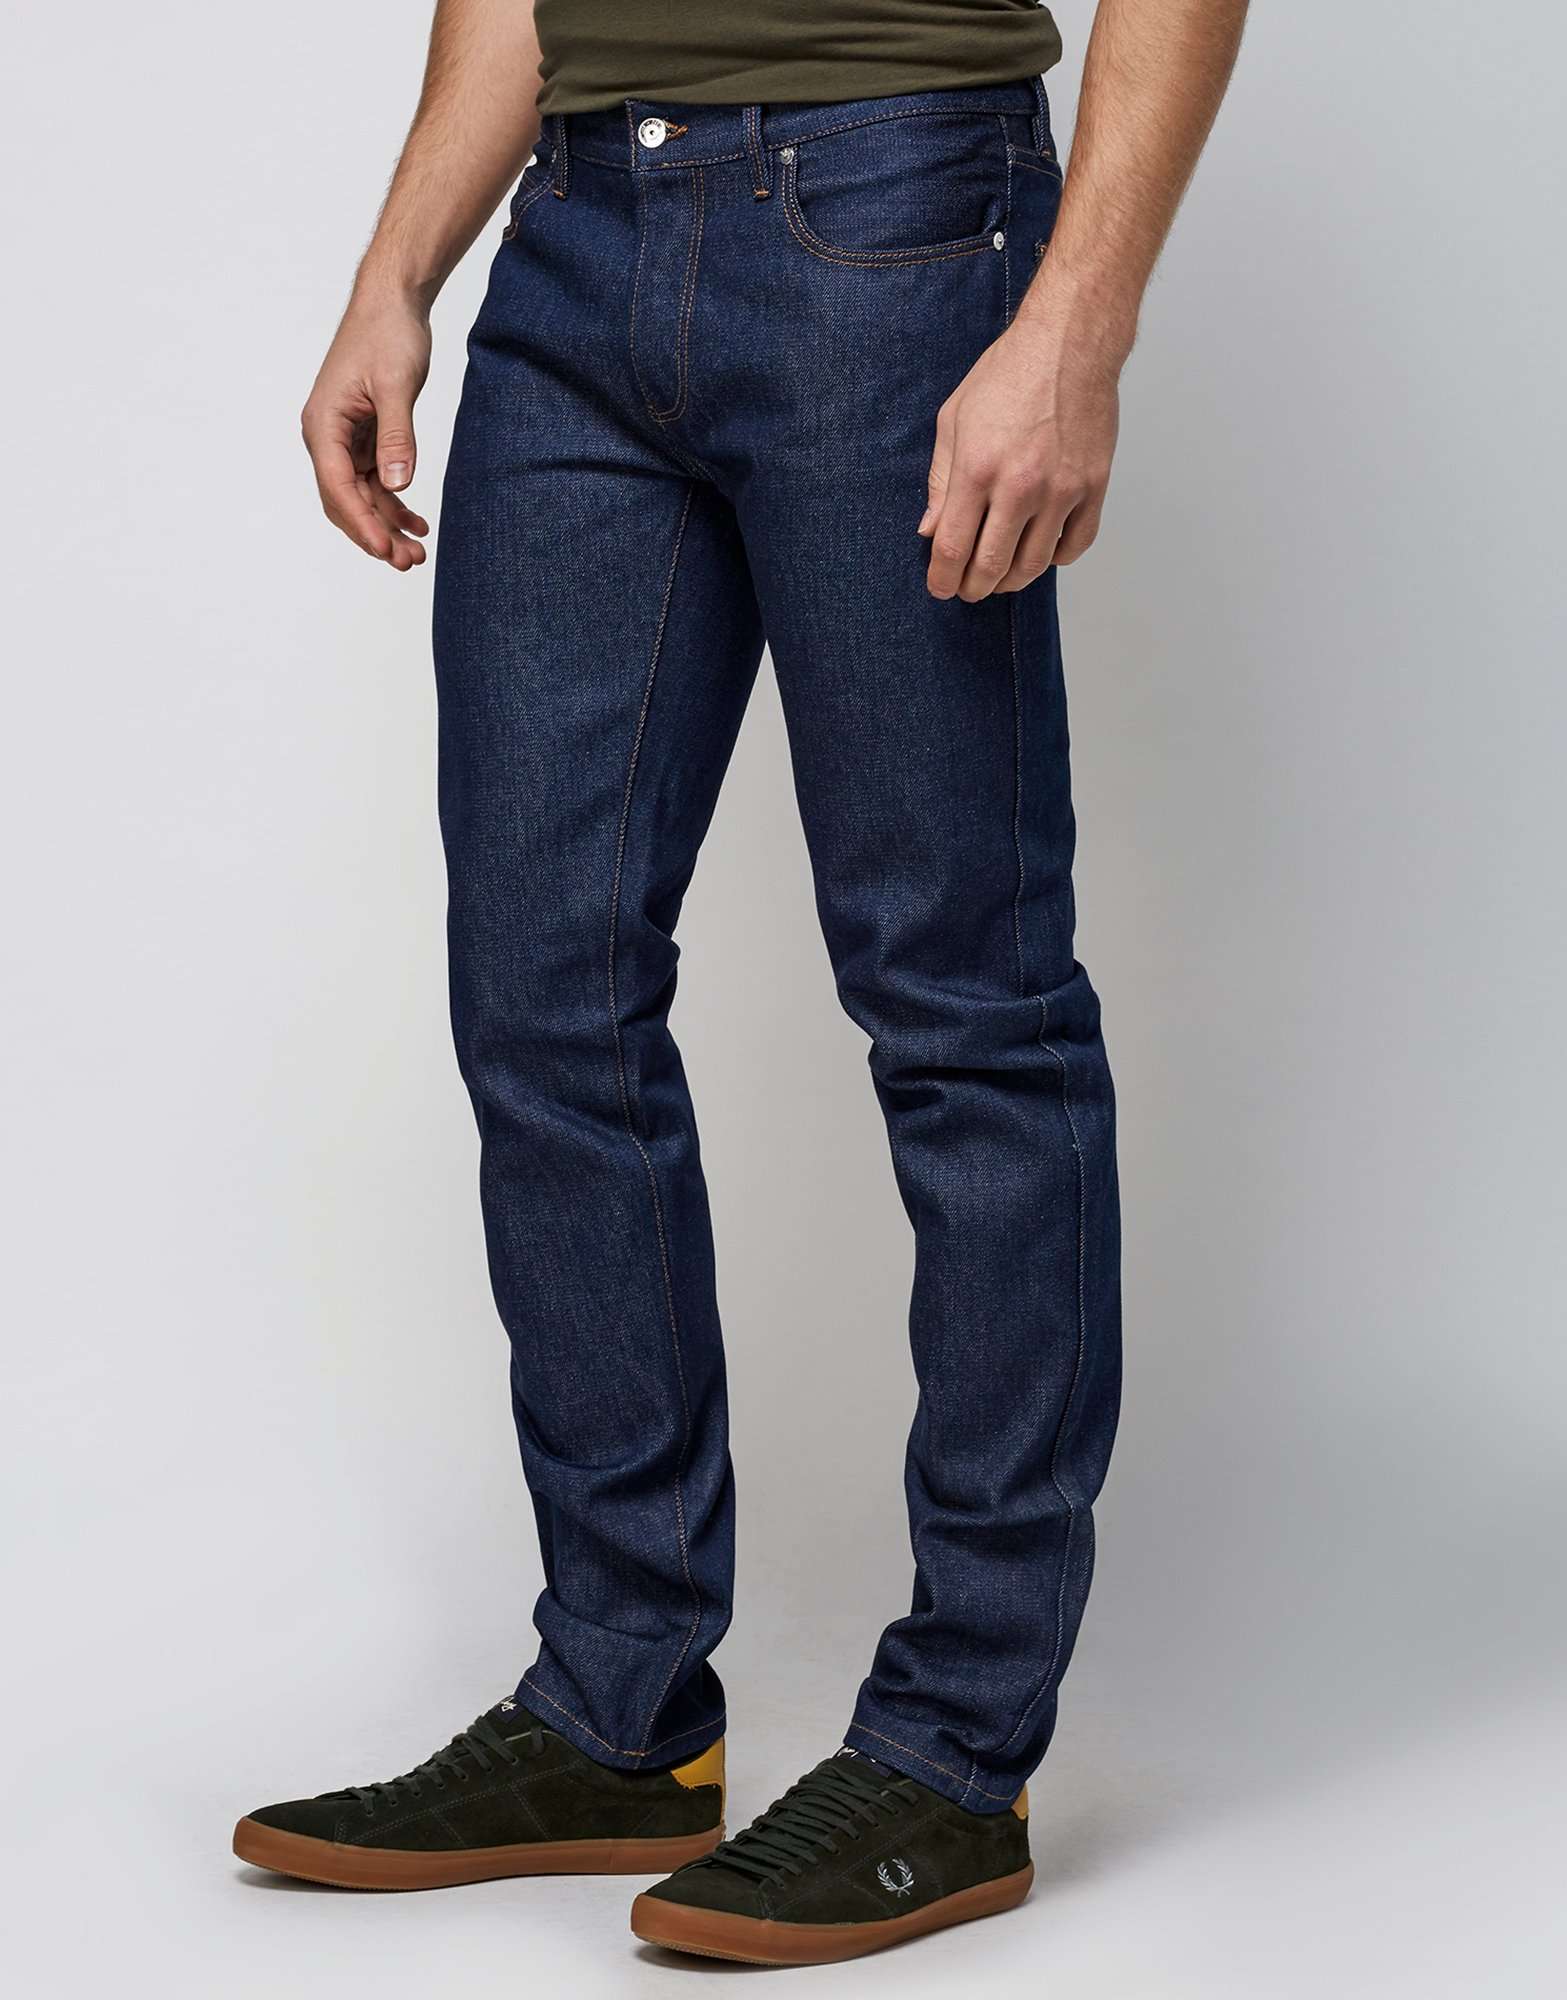 Lacoste L!VE Slim Fit Selvedge Raw Denim Jeans | scotts Menswear